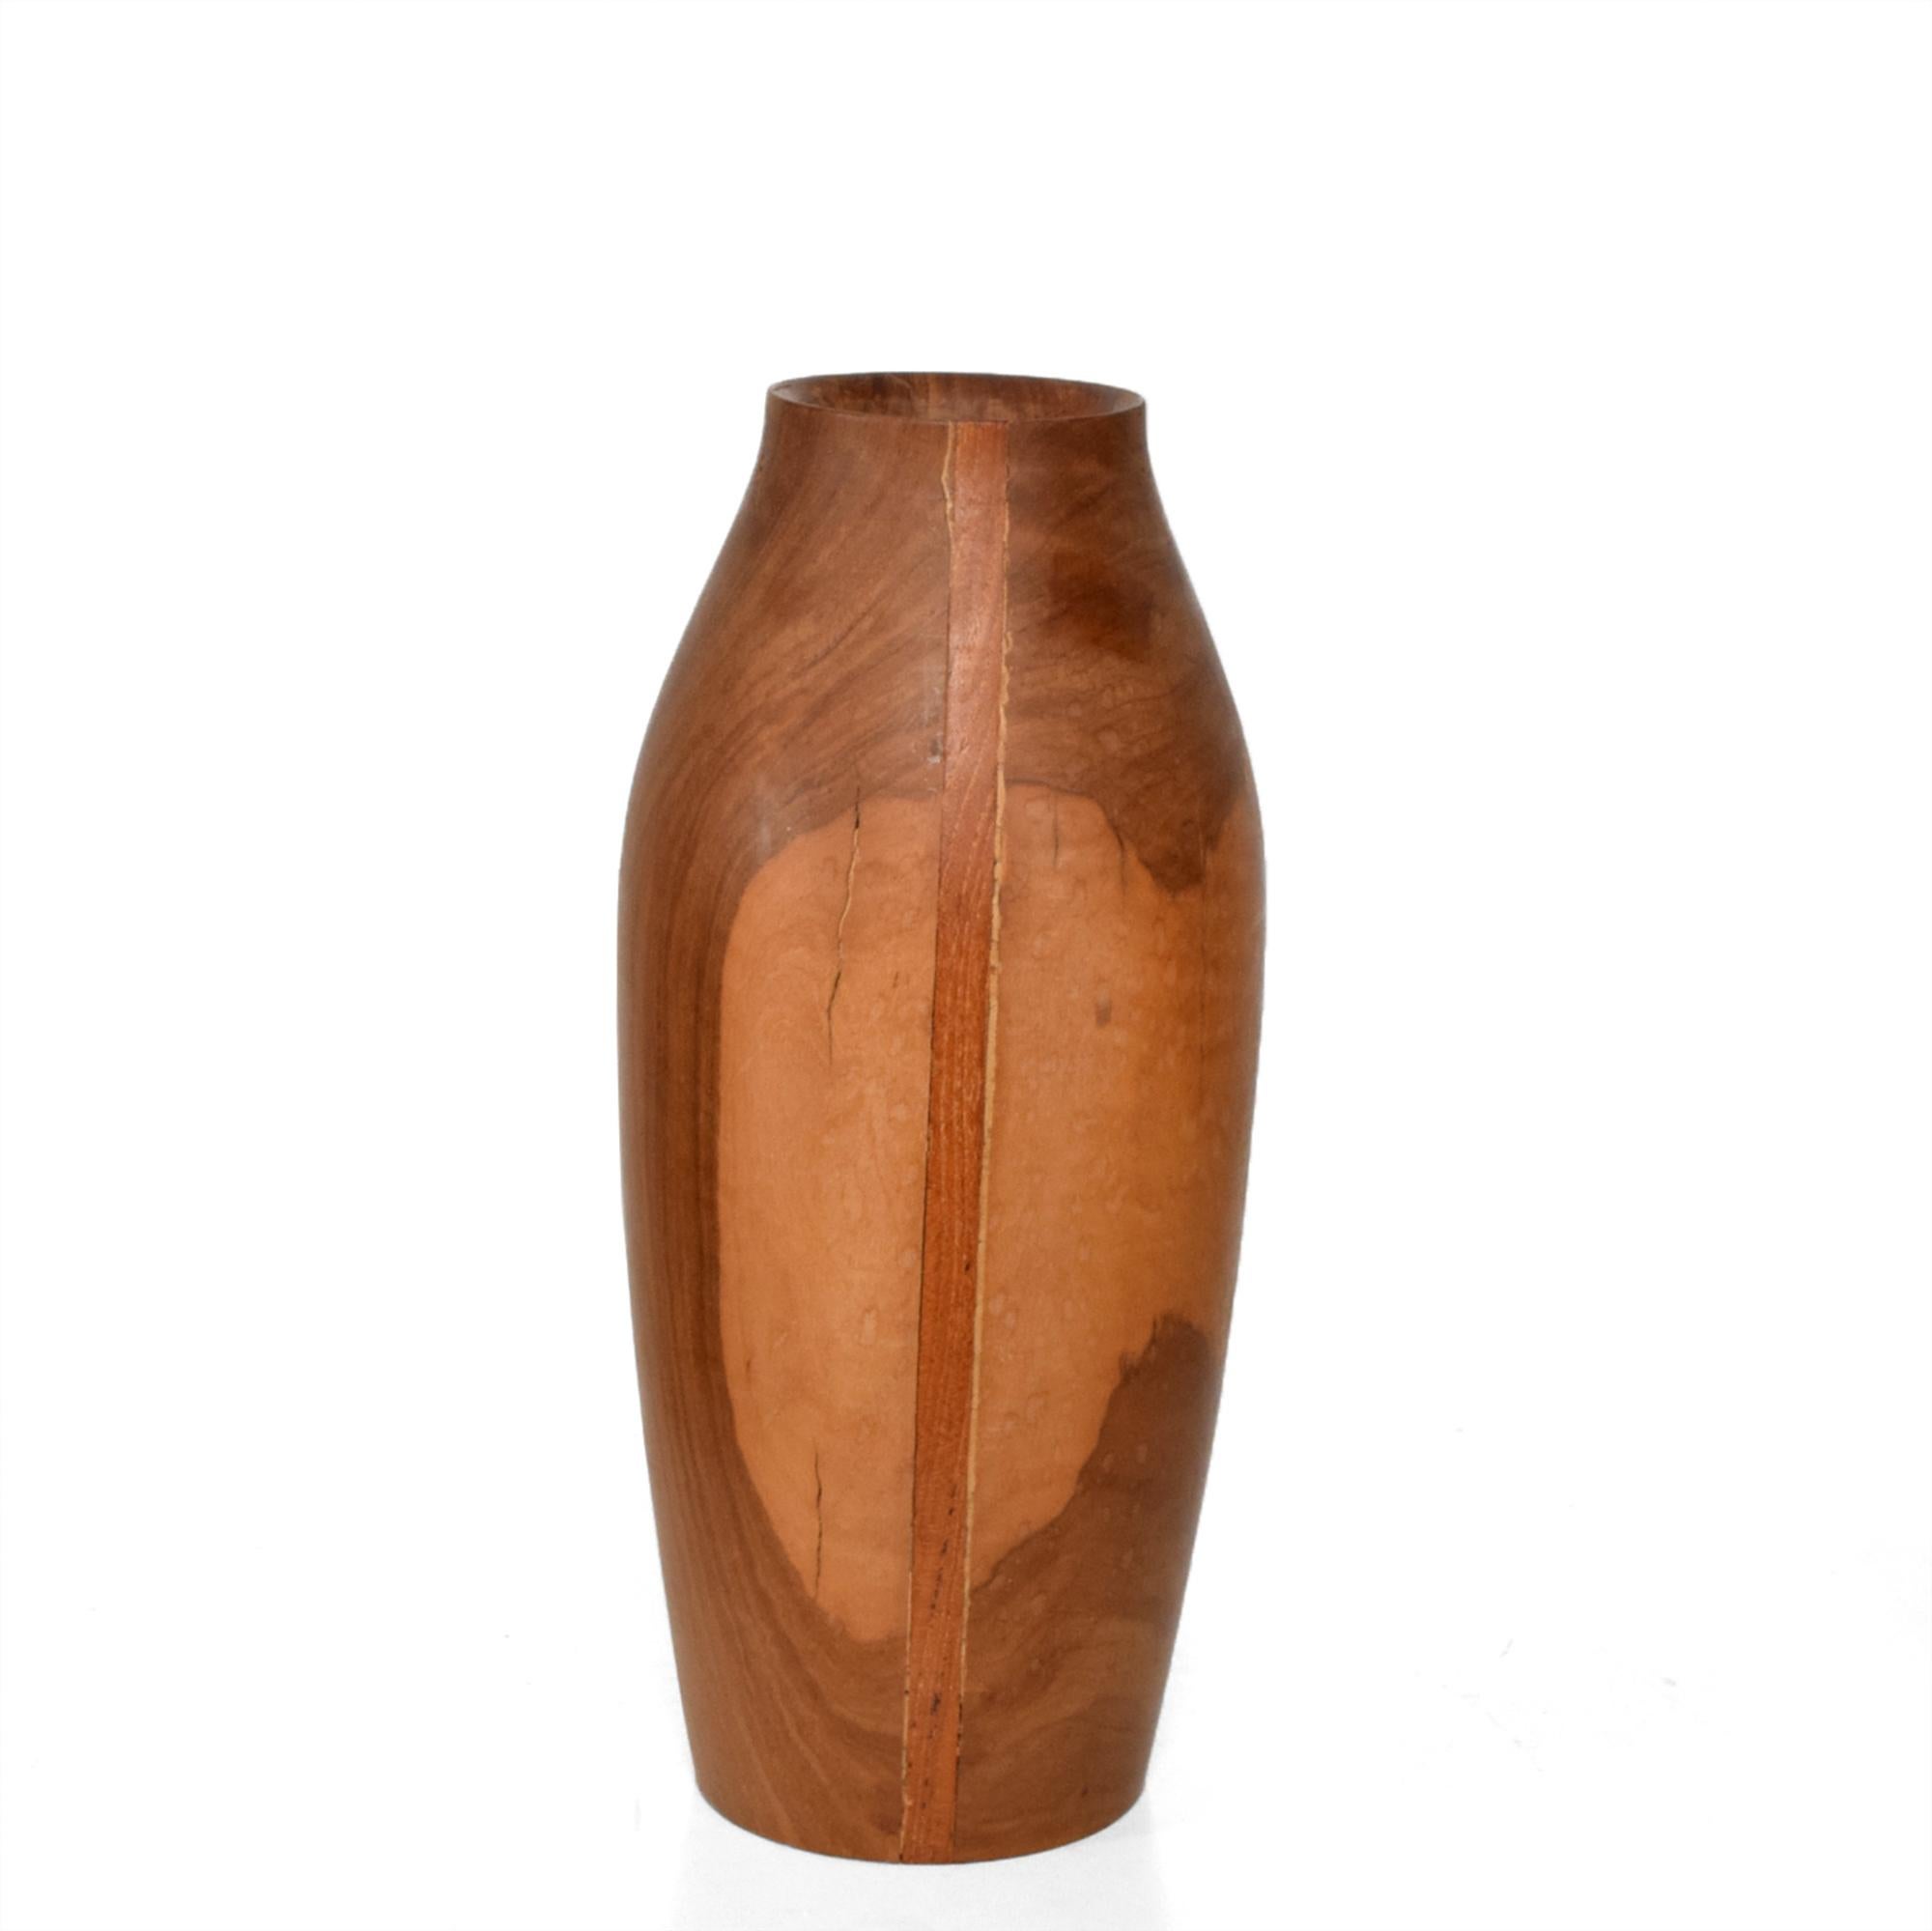 Mid-Century Modern sculptural turned wood vase after designs of master wood turner Rude Osolnik.
Unmarked no information on the maker, 1970s, California.
Dimensions: 11